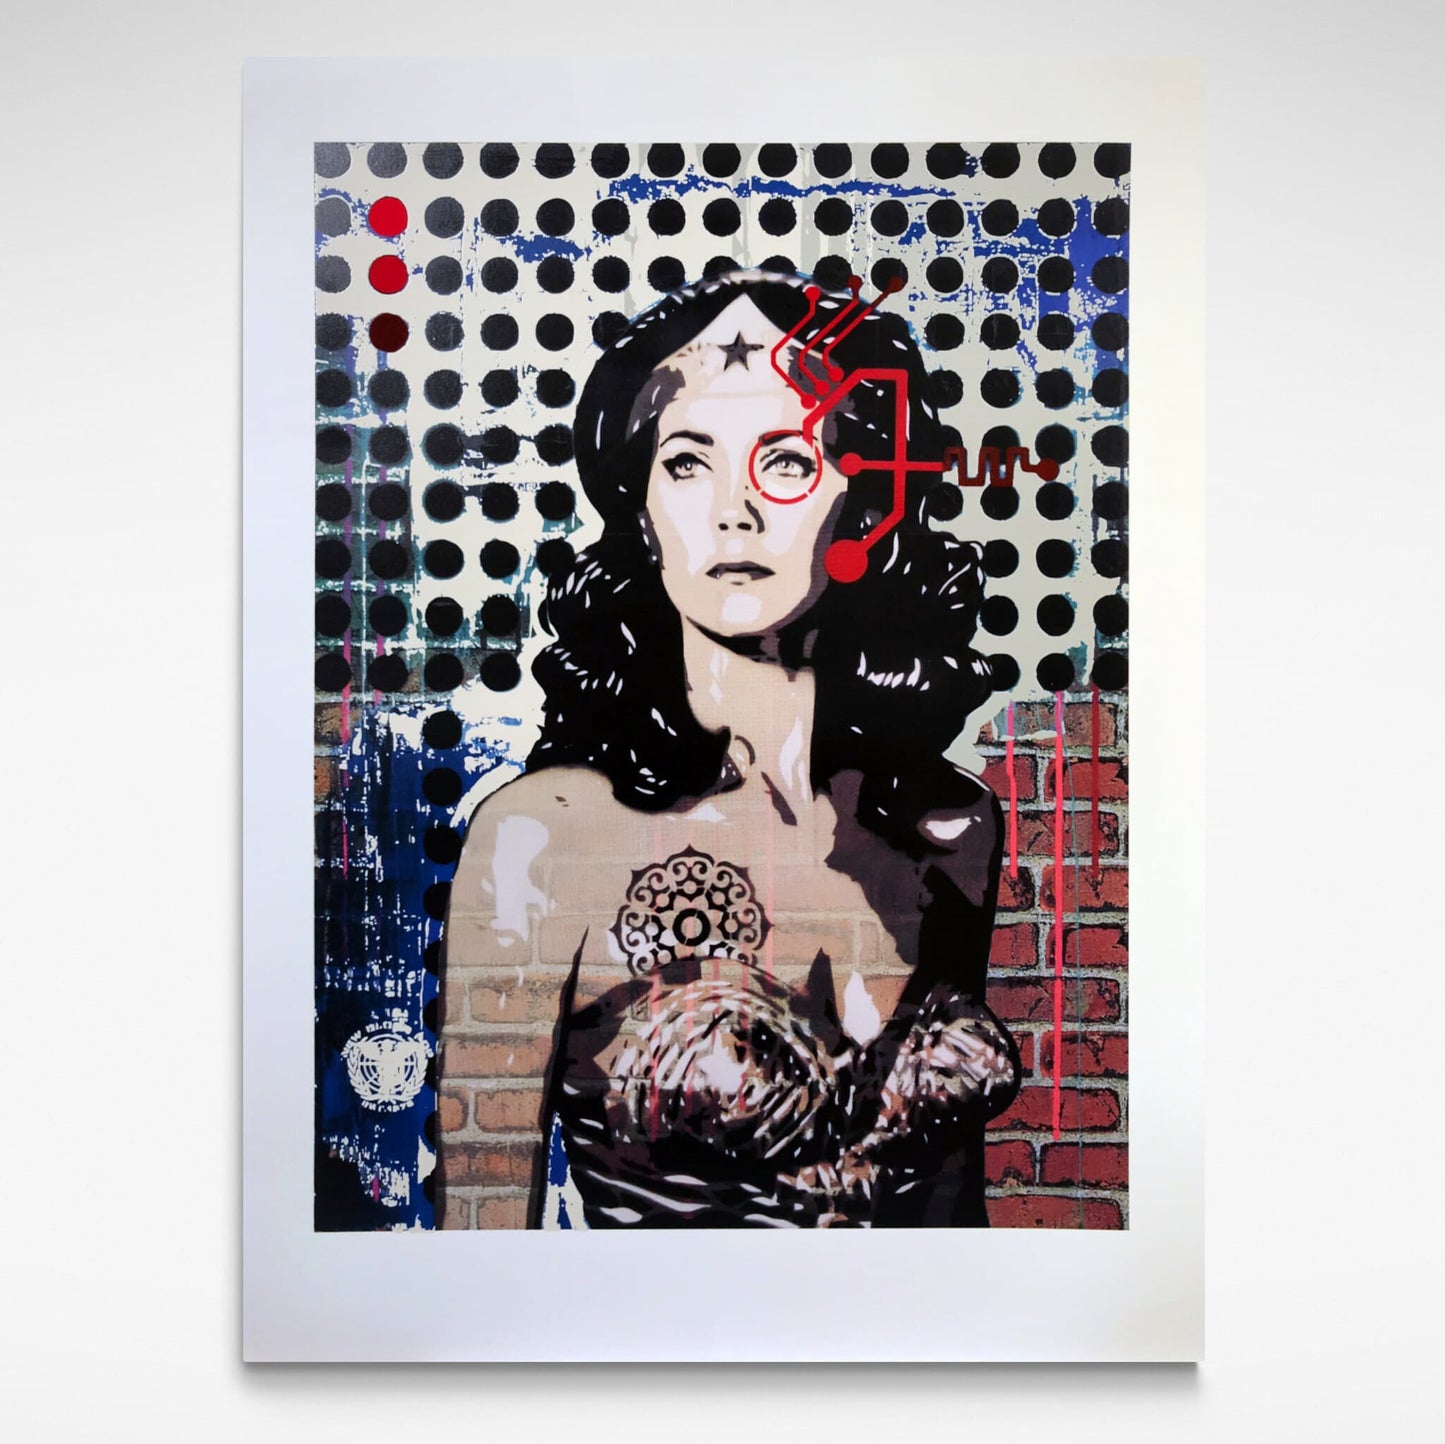 A pop art screenprint depicting Wonder Woman standing in front of a brick wall